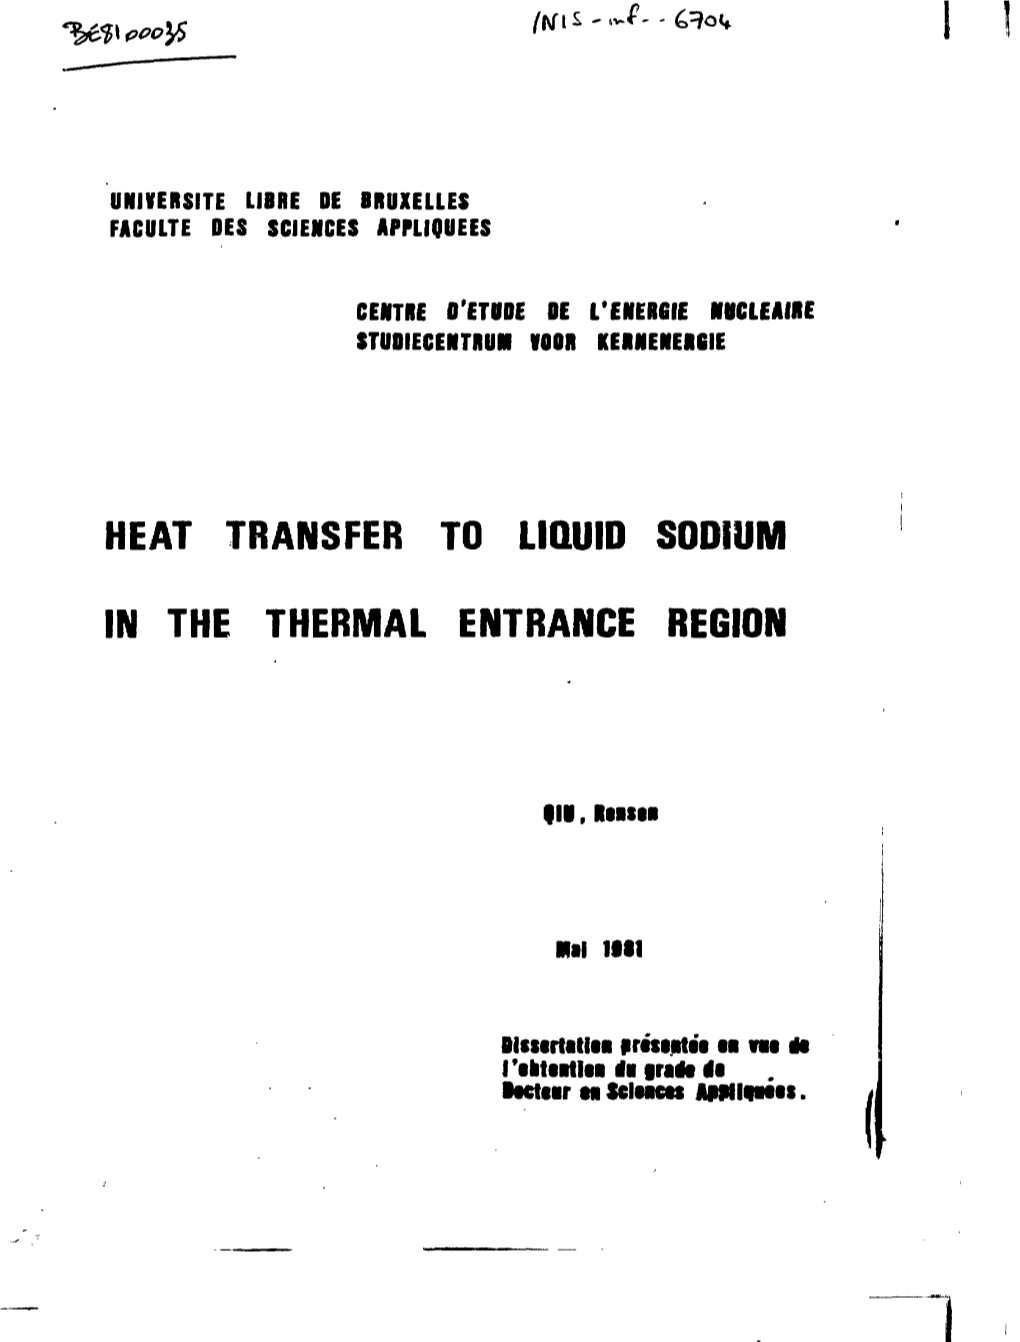 Heat Transfer to Liquid Sodium in the Thermal Entrance Region